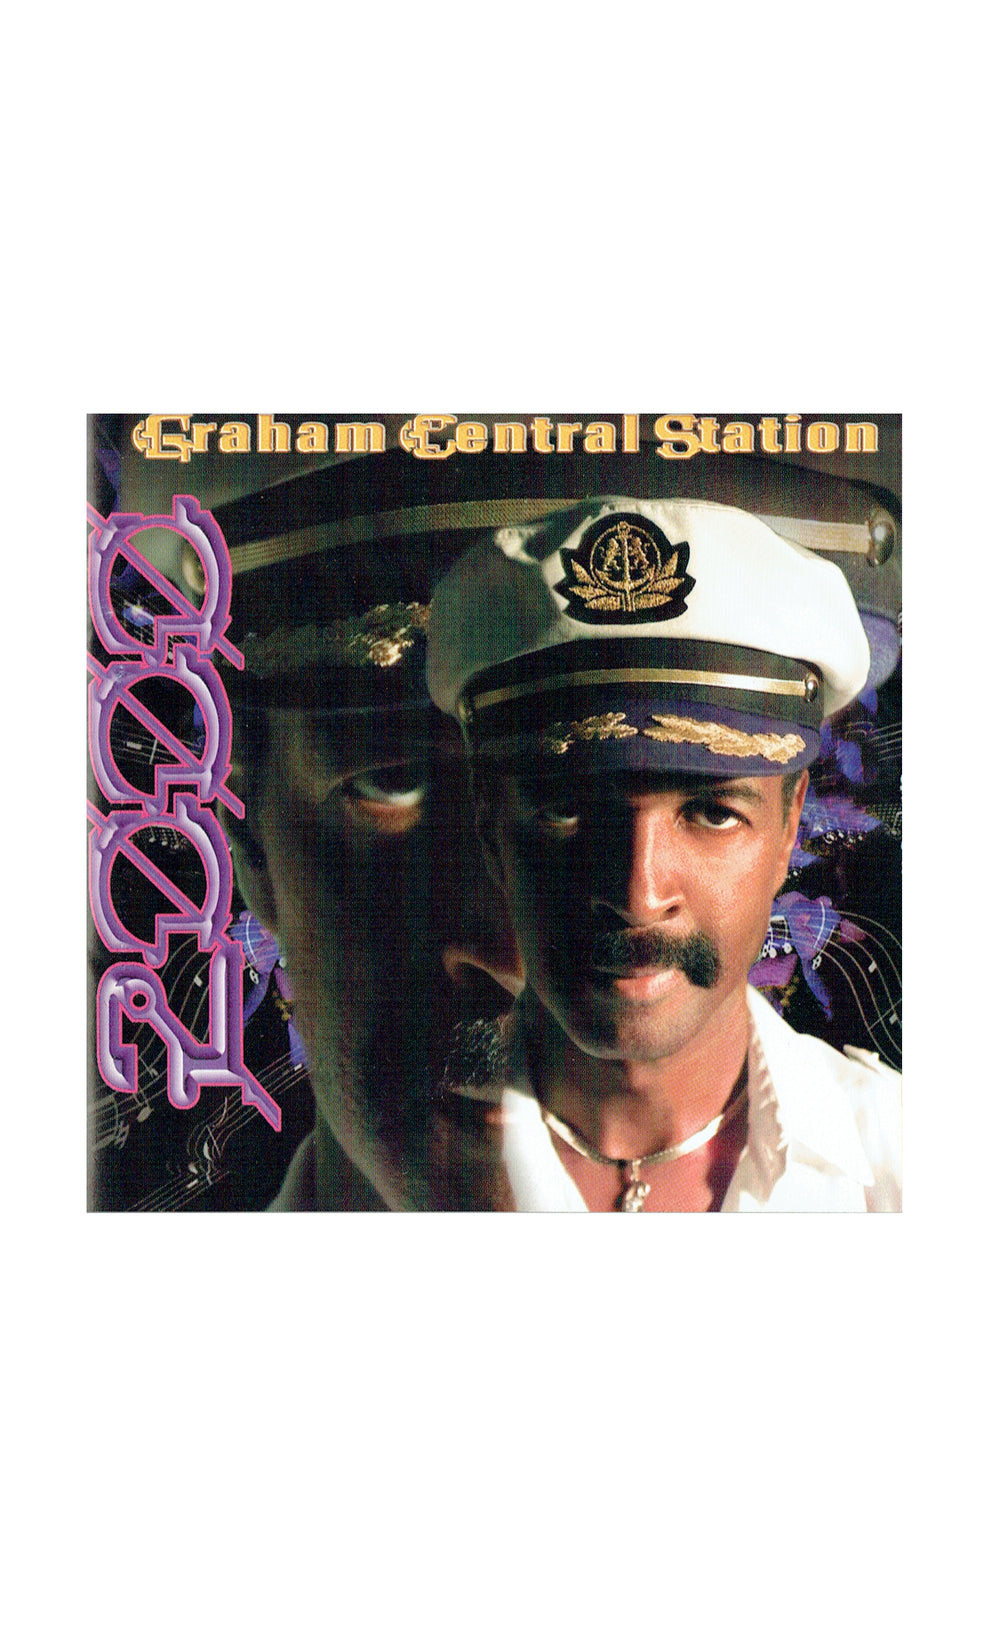 Graham Central Station Larry CD Album GCS2000 NPG Records Prince